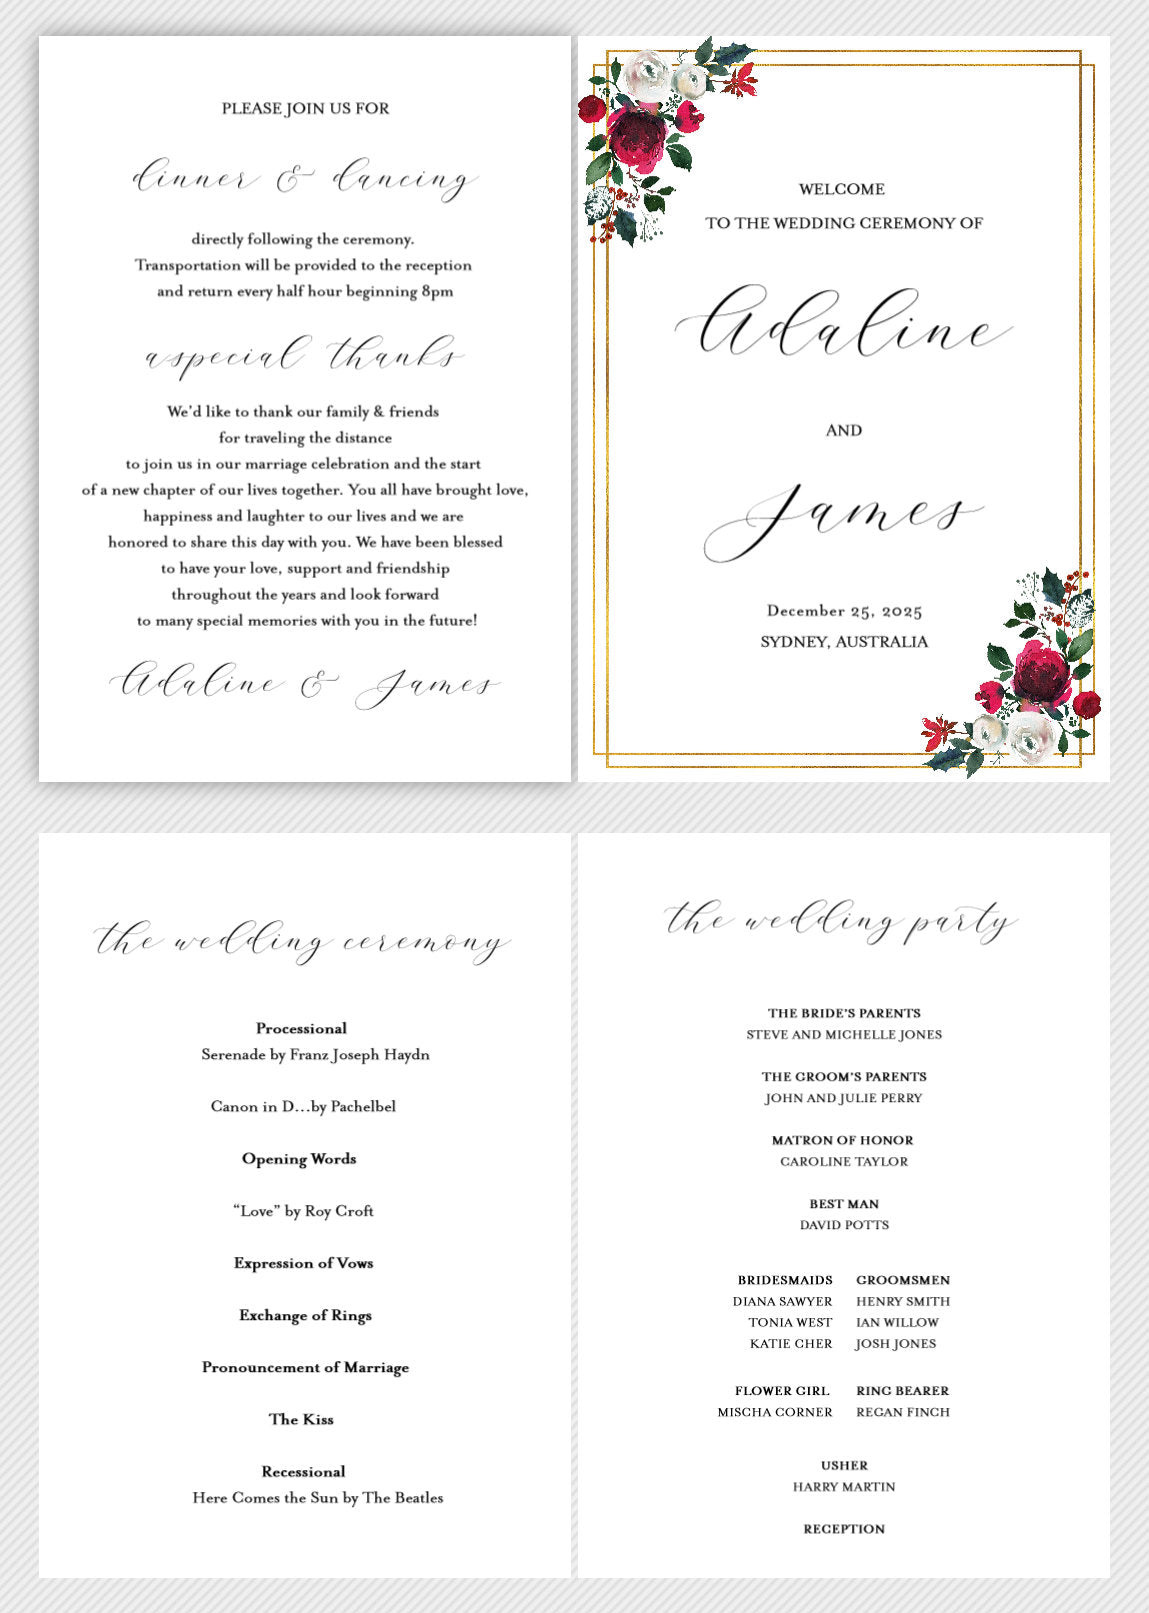 Folded Wedding Ceremony Program Card Editable Template Christmas Wedding Printable Instant Download Order of Service  - Ada MENU|PROGRAMS|TIMELINE SAVVY PAPER CO